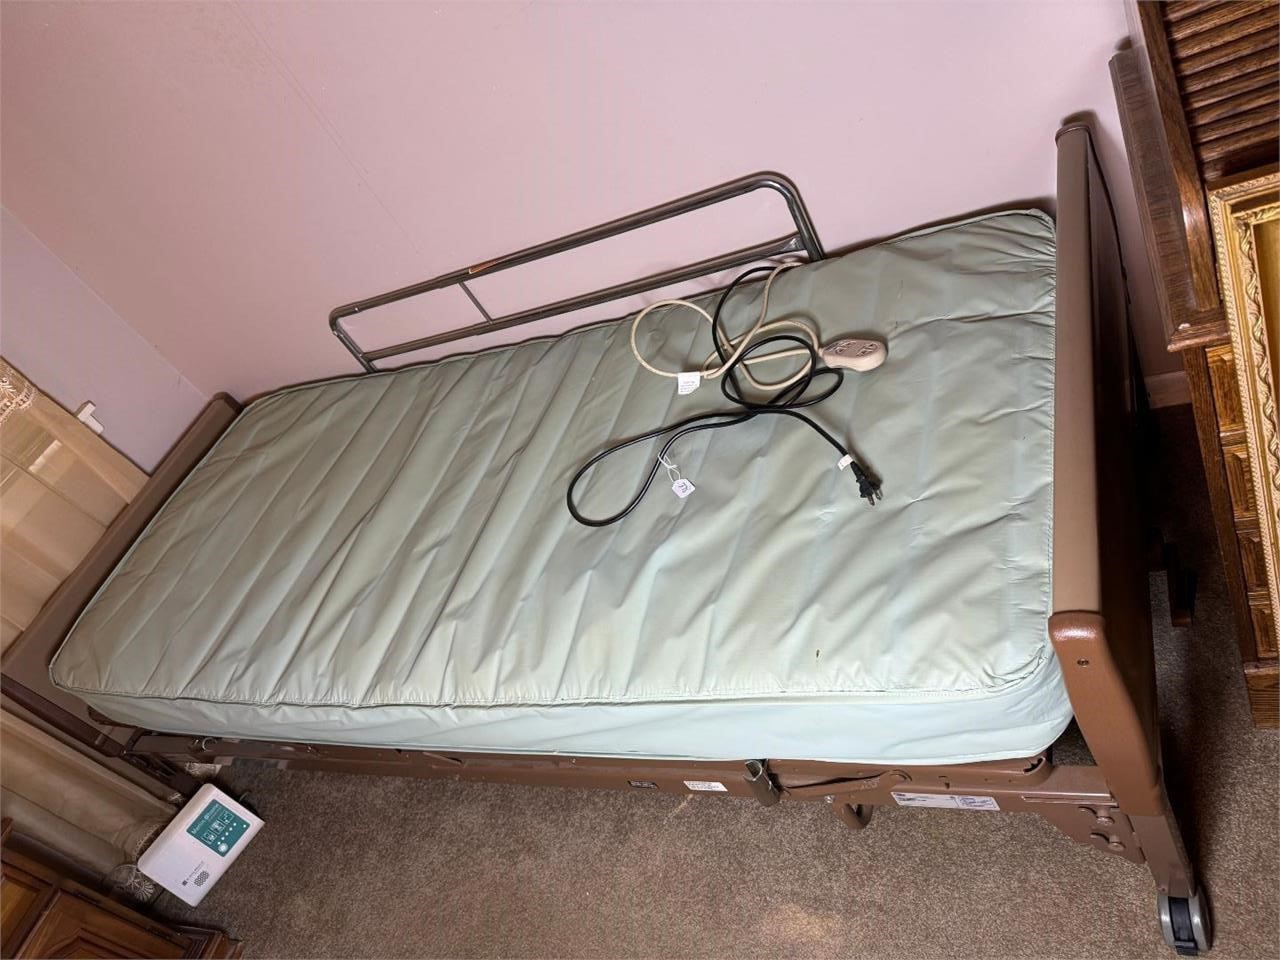 hospital bed w/ mattress works